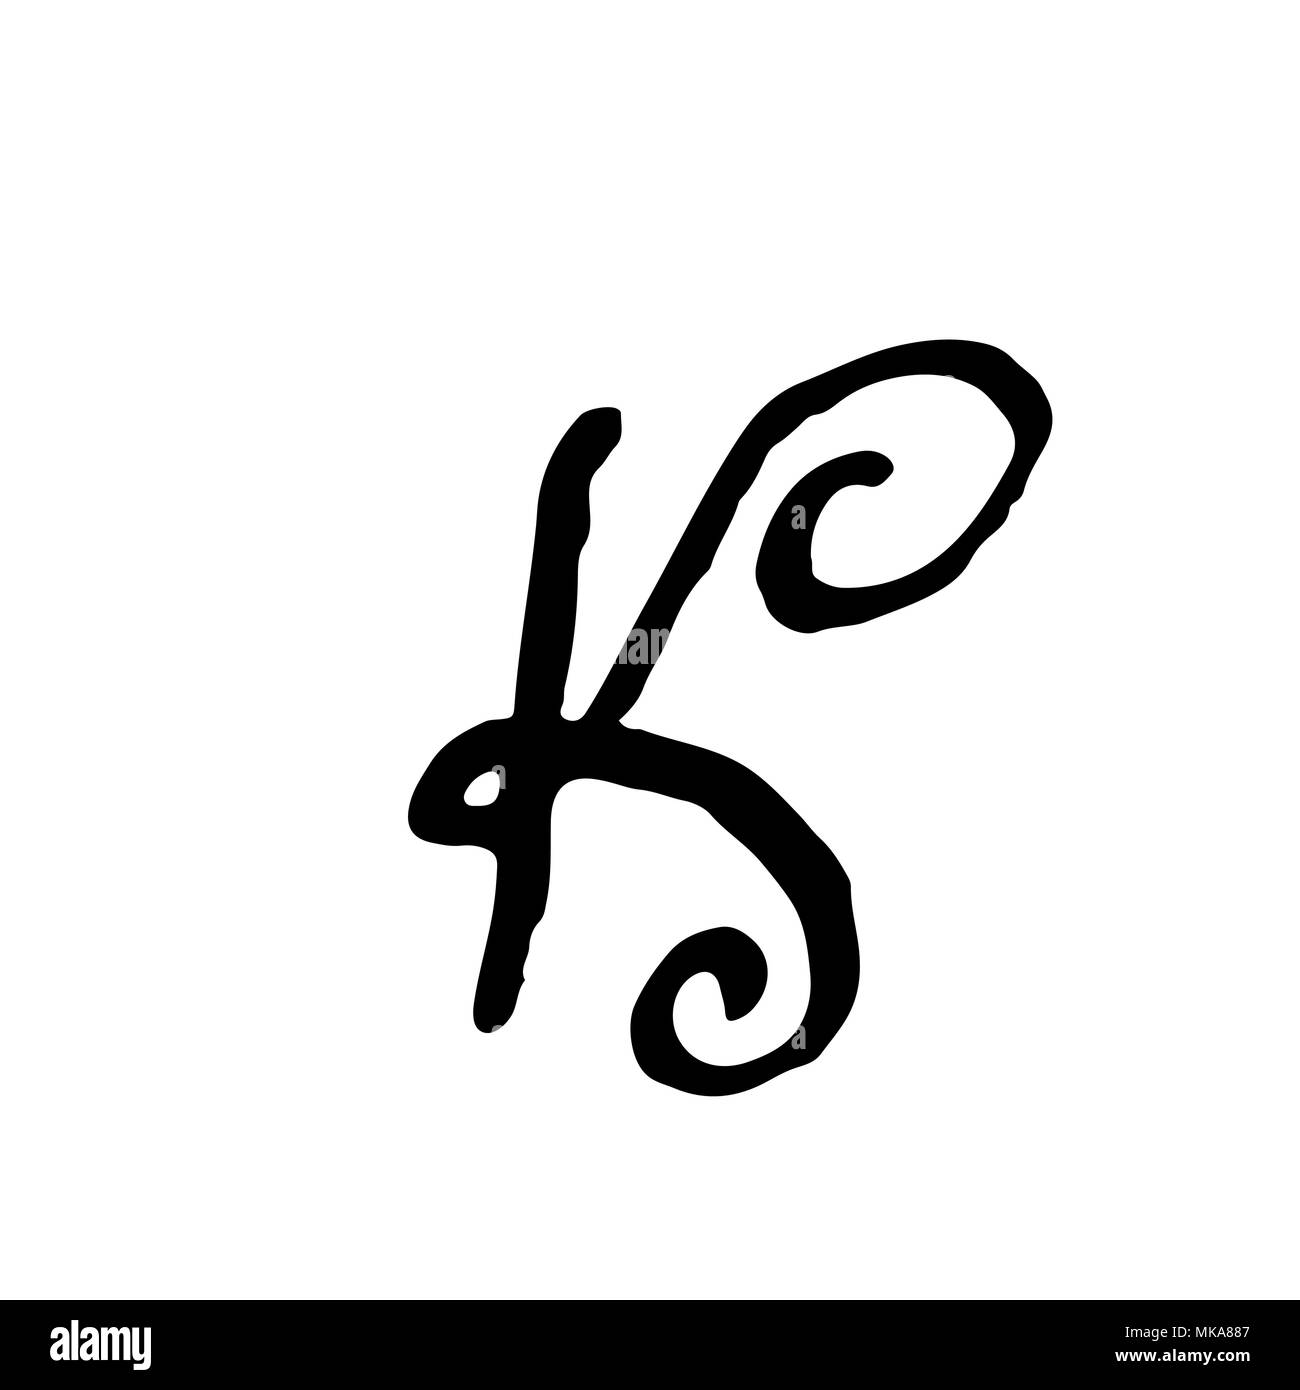 Letter K. Handwritten by dry brush. Rough strokes textured font. Vector illustration. Grunge style alphabet. Stock Vector